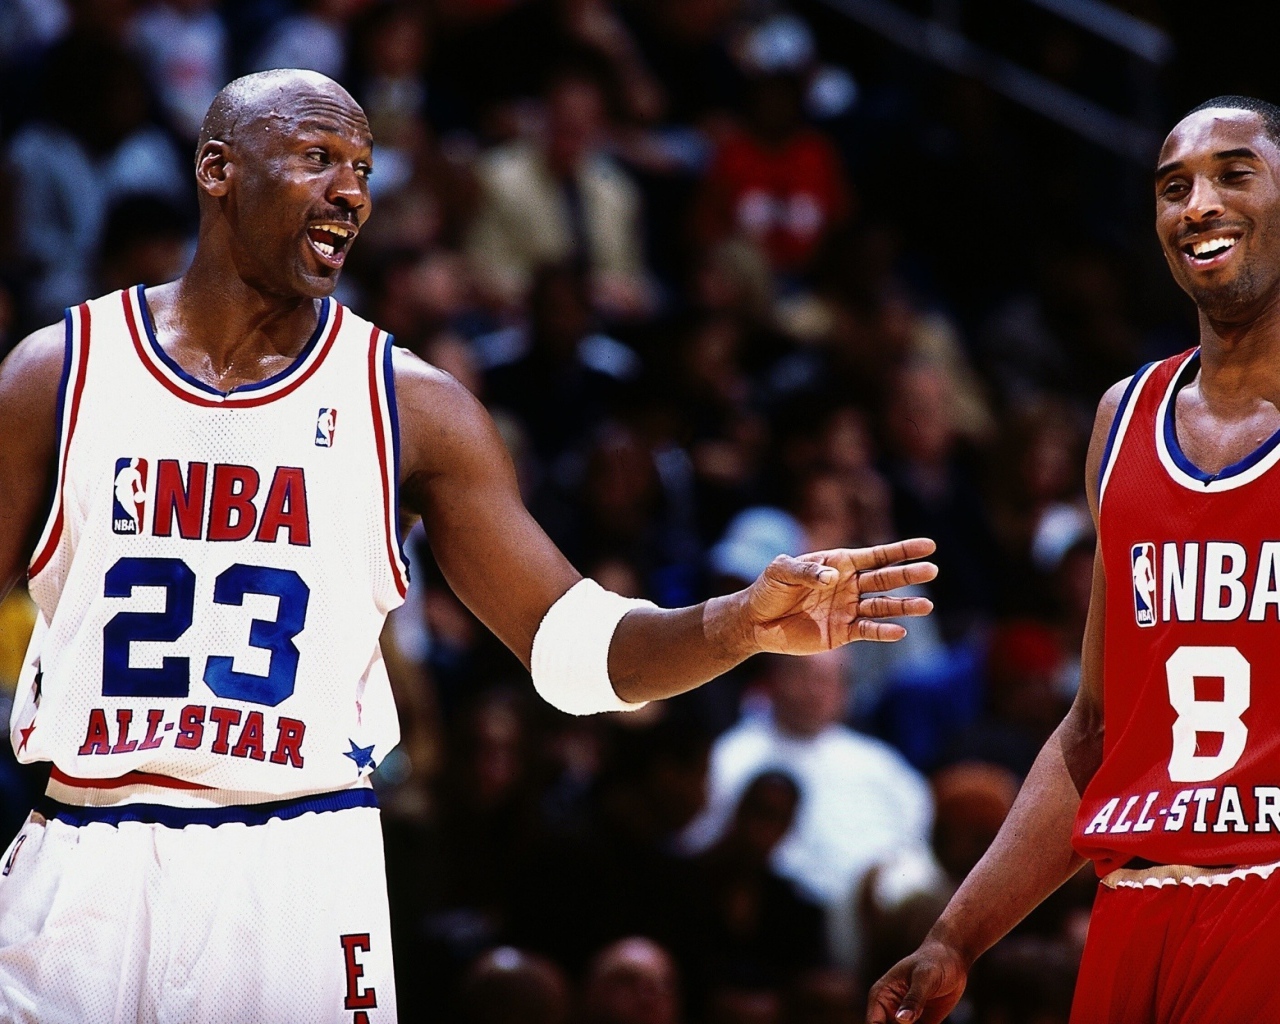 Basketball player Michael Jordan and Kobe Bryant, NBA